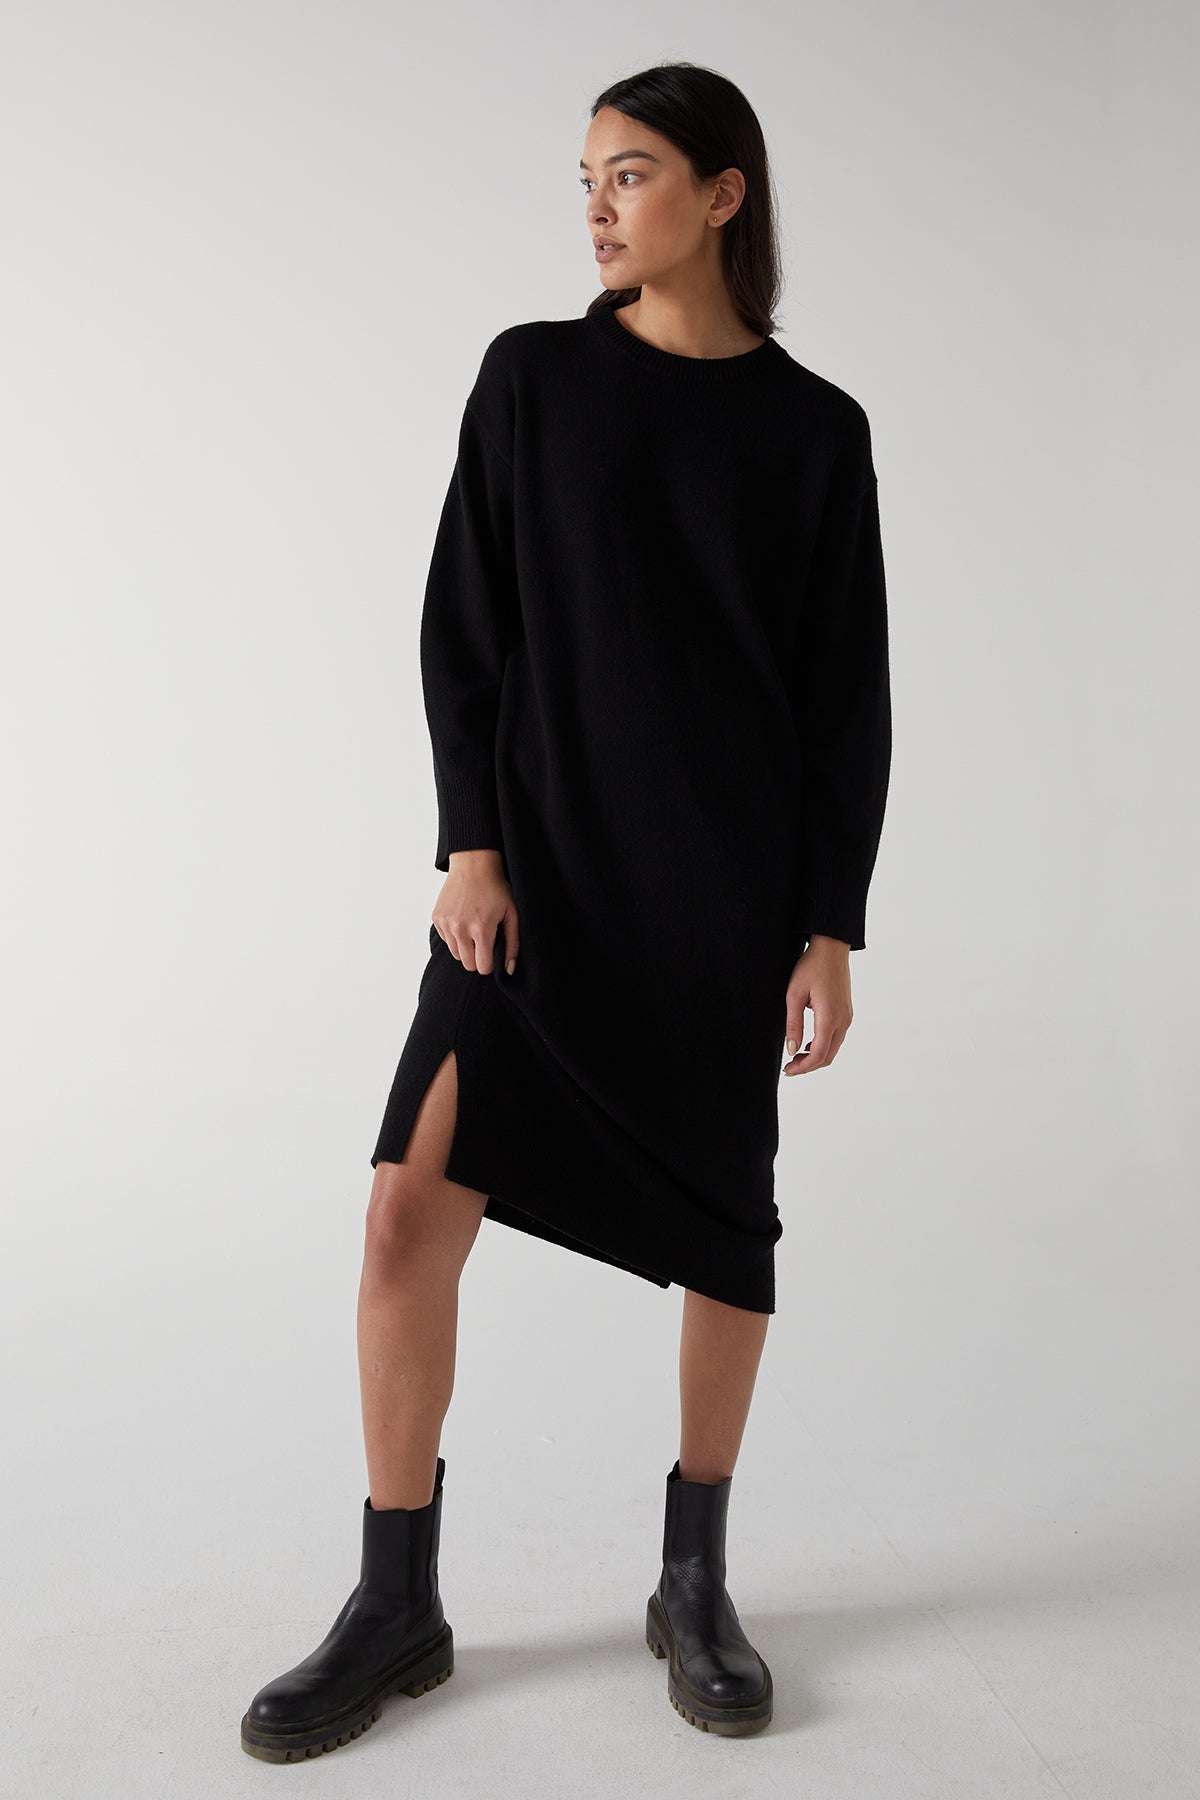 The model is wearing a black LAUREL DRESS by Velvet by Jenny Graham with side hem slits.-25315829612737